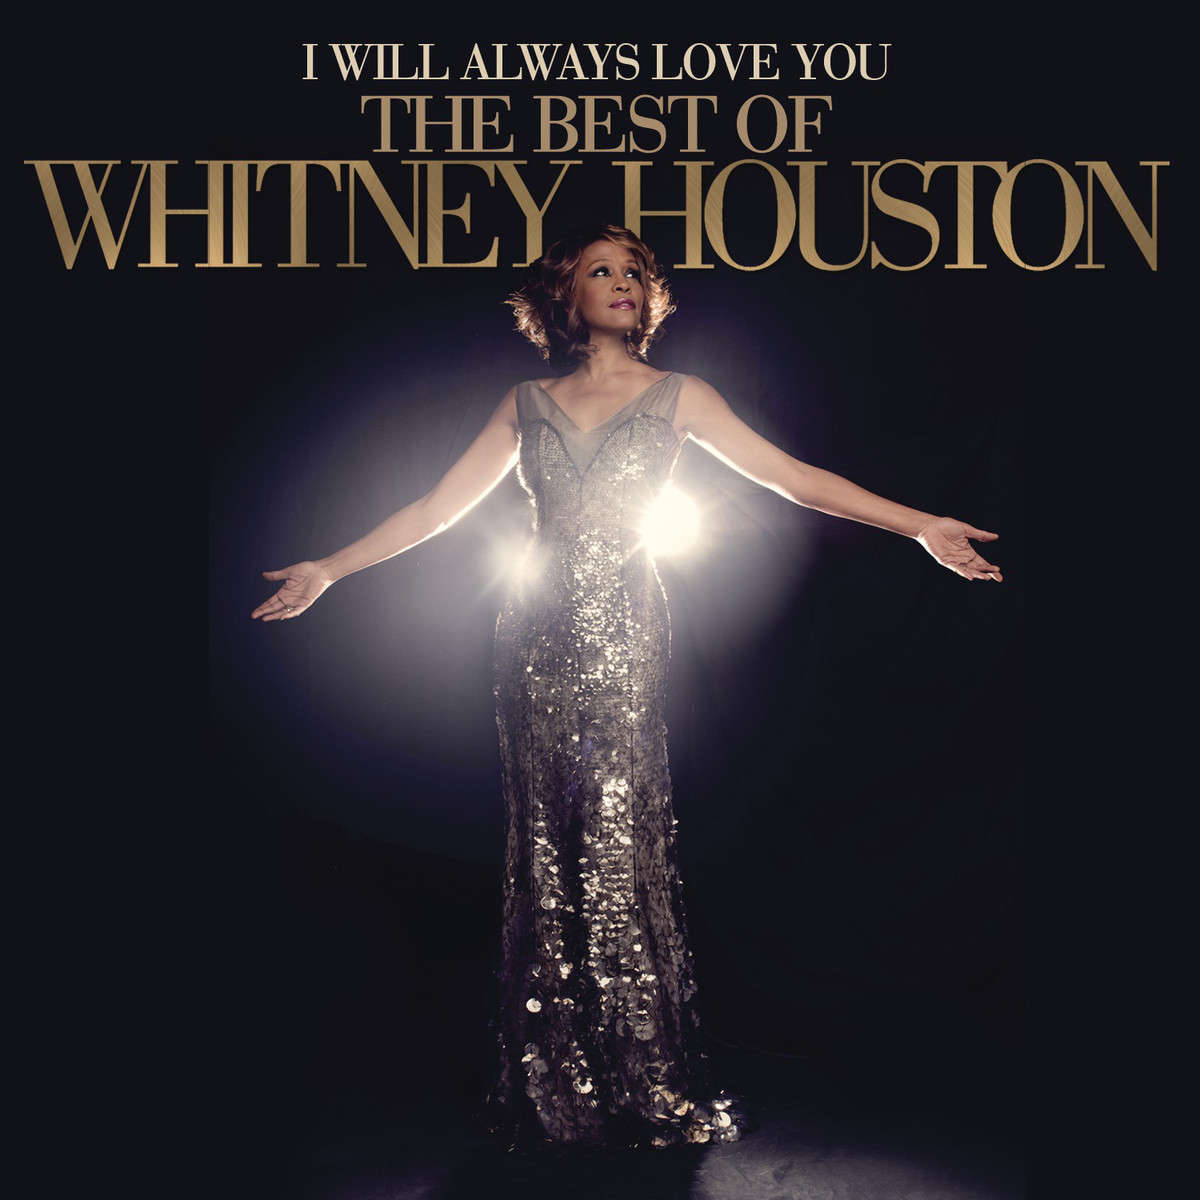 http://3.bp.blogspot.com/-6X6X5bMVXEo/UGHjR50ljVI/AAAAAAAAFb0/69JON1xSkqs/s1600/Whitney-Houston-I-Will-Always-Love-You-The-Best-Of-2012.png